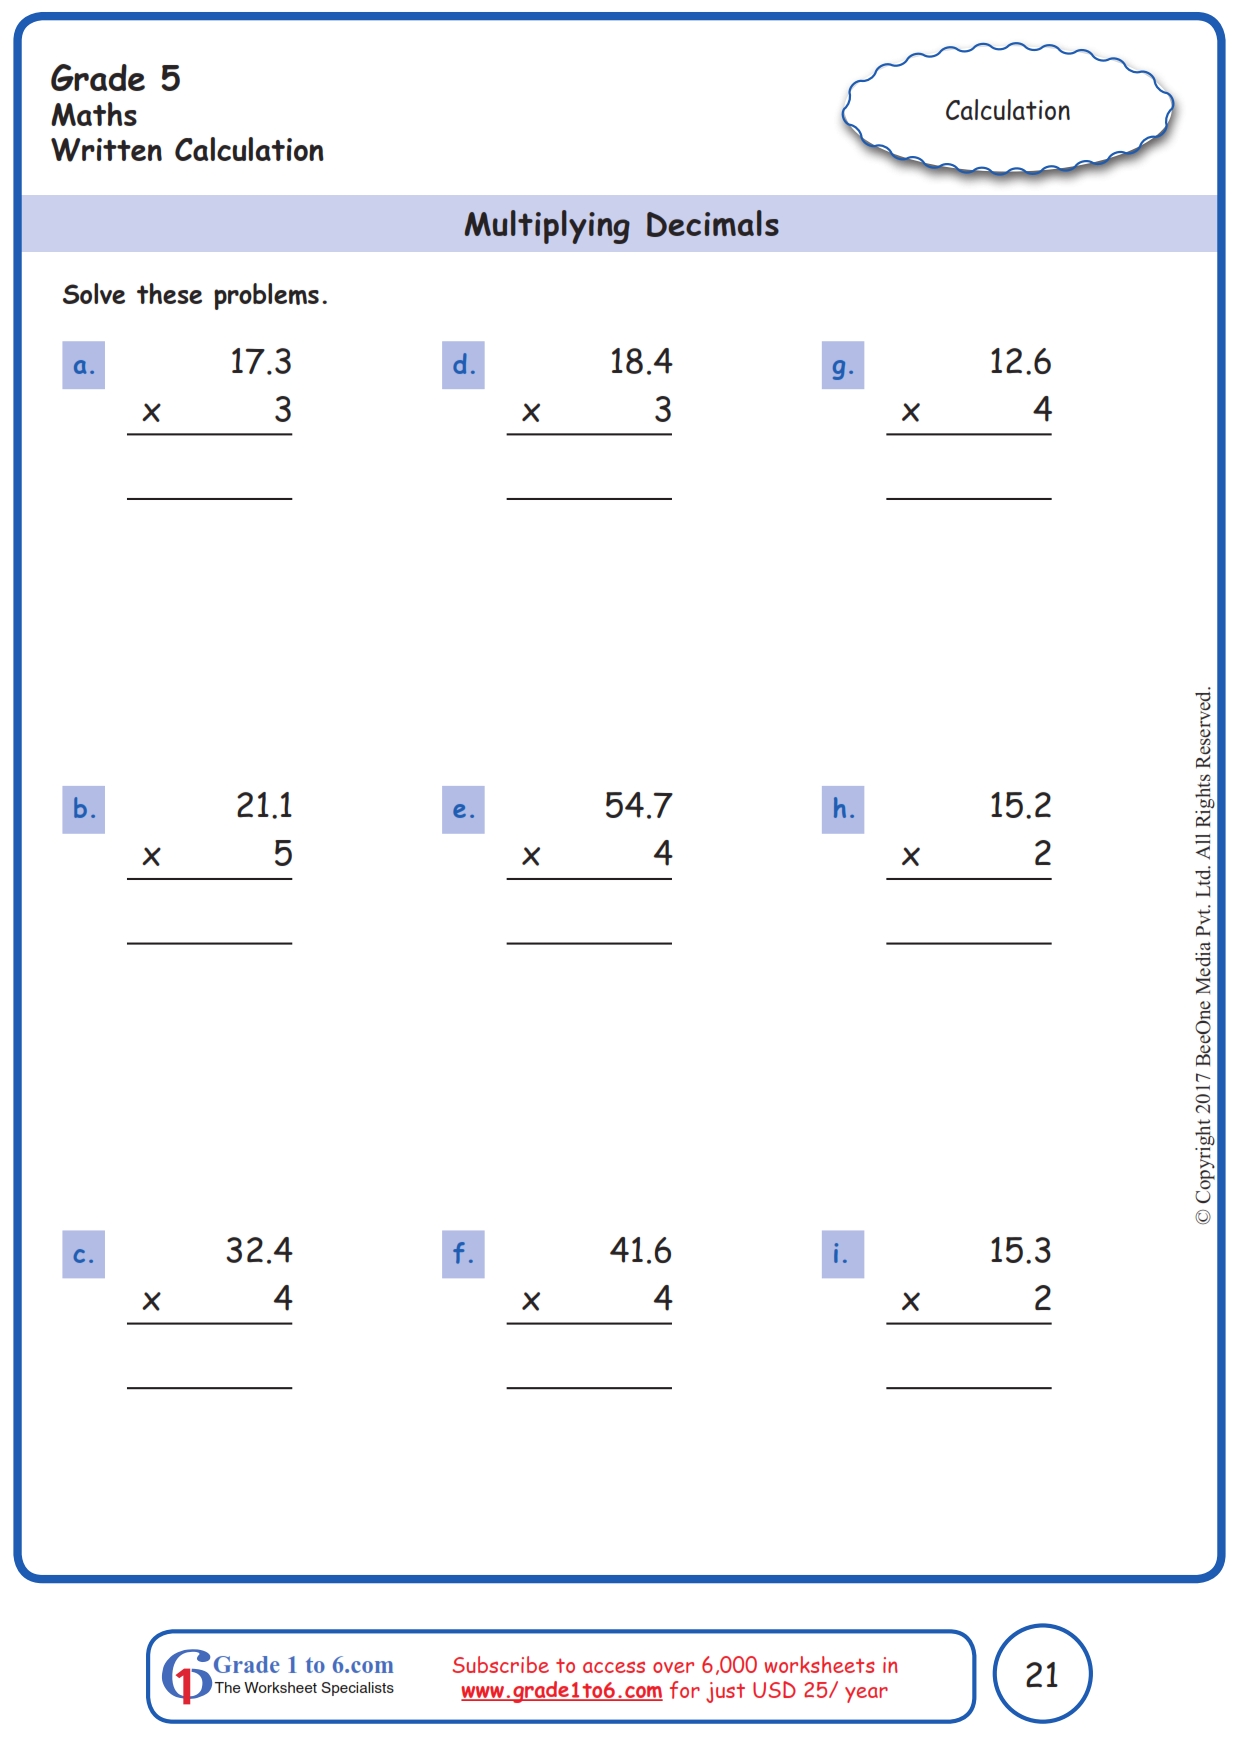 multiplying-decimals-worksheets-math-monks-5th-grade-multiplication